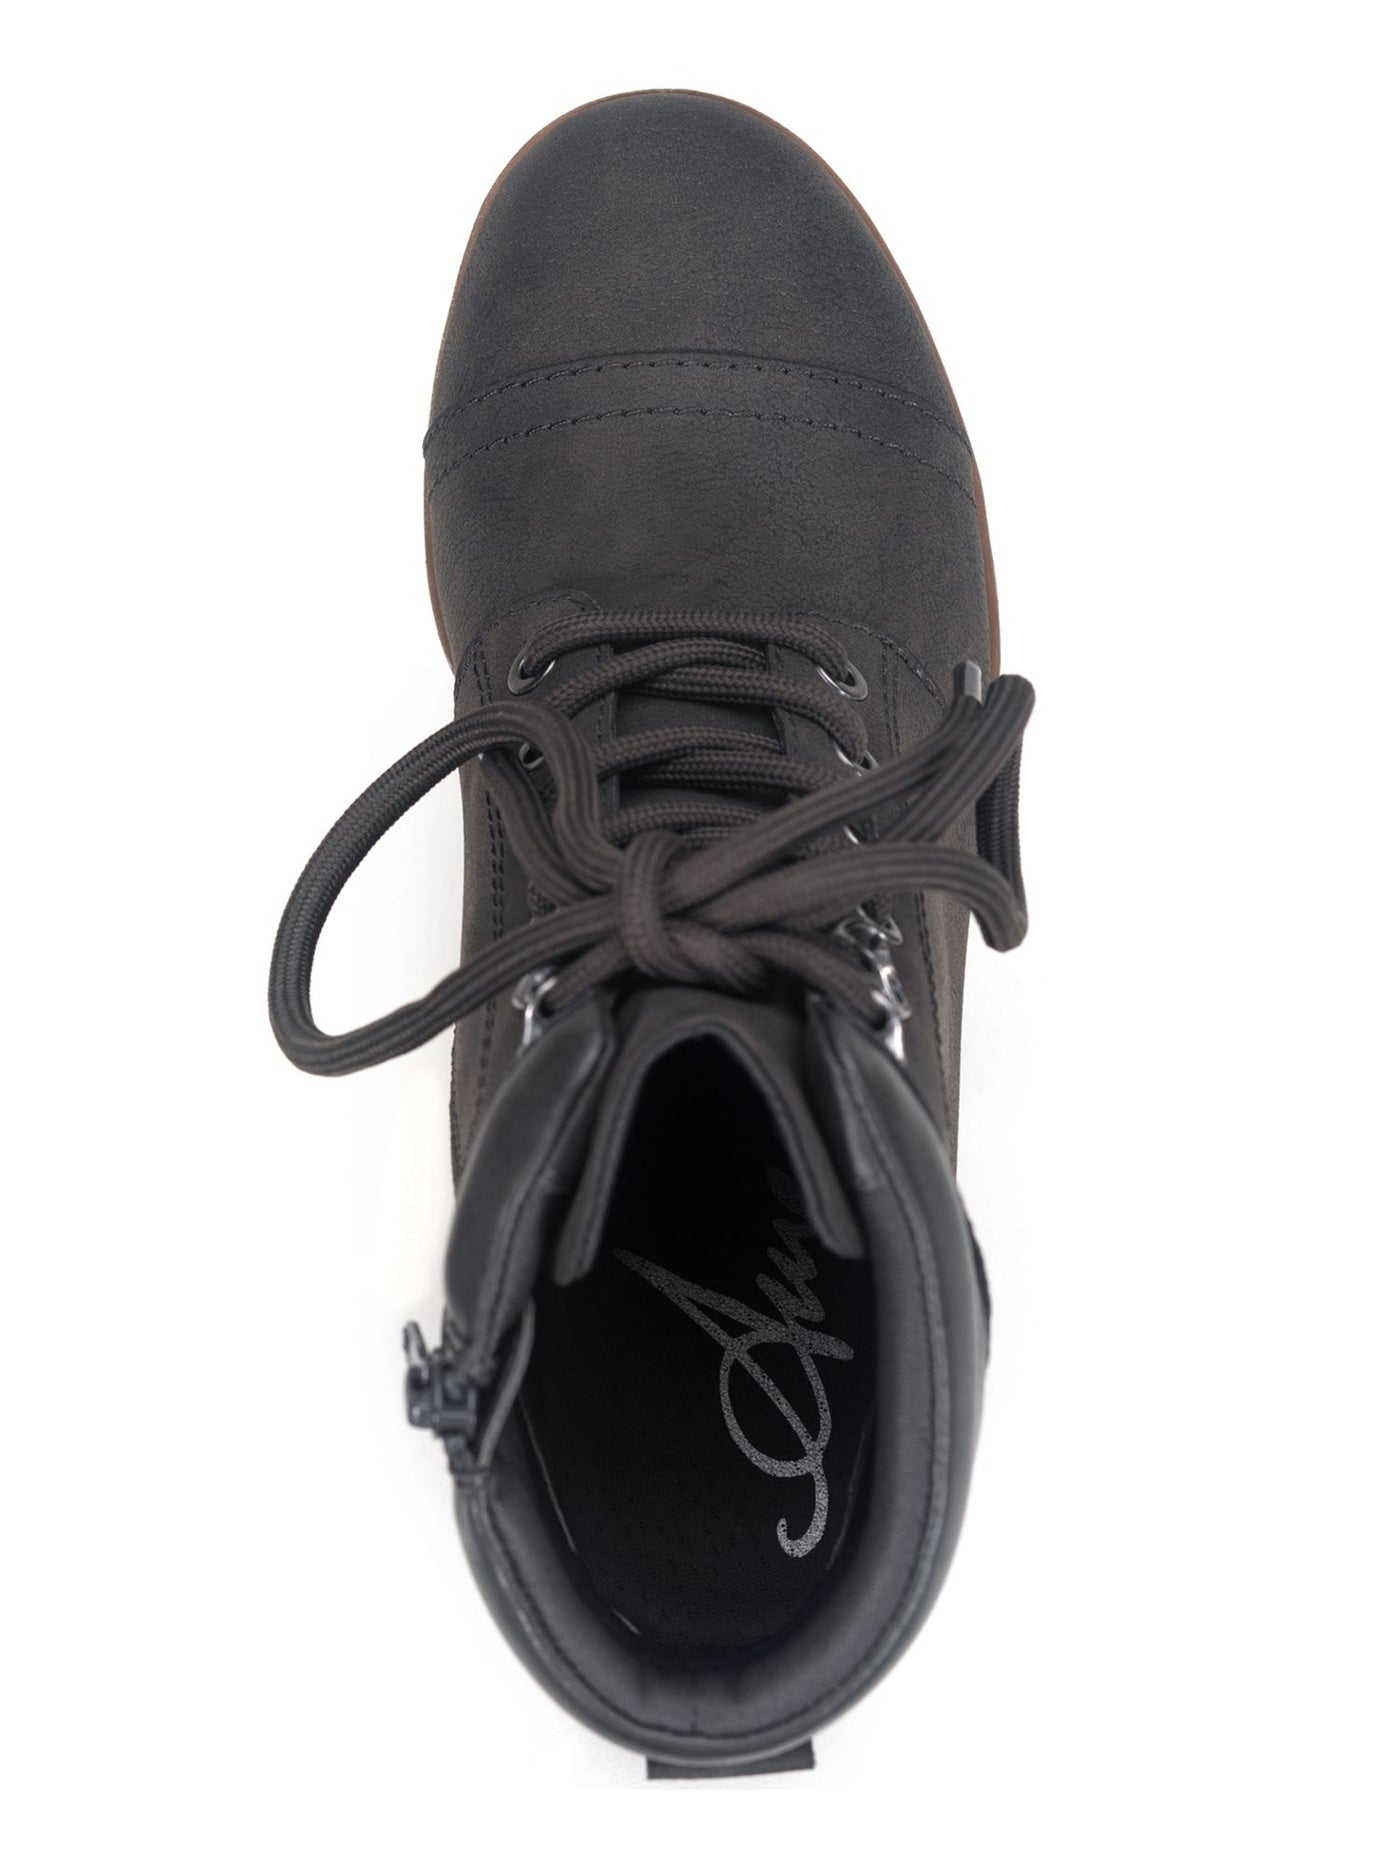 AMERICAN RAG Shoes Gray Juniors 7 M